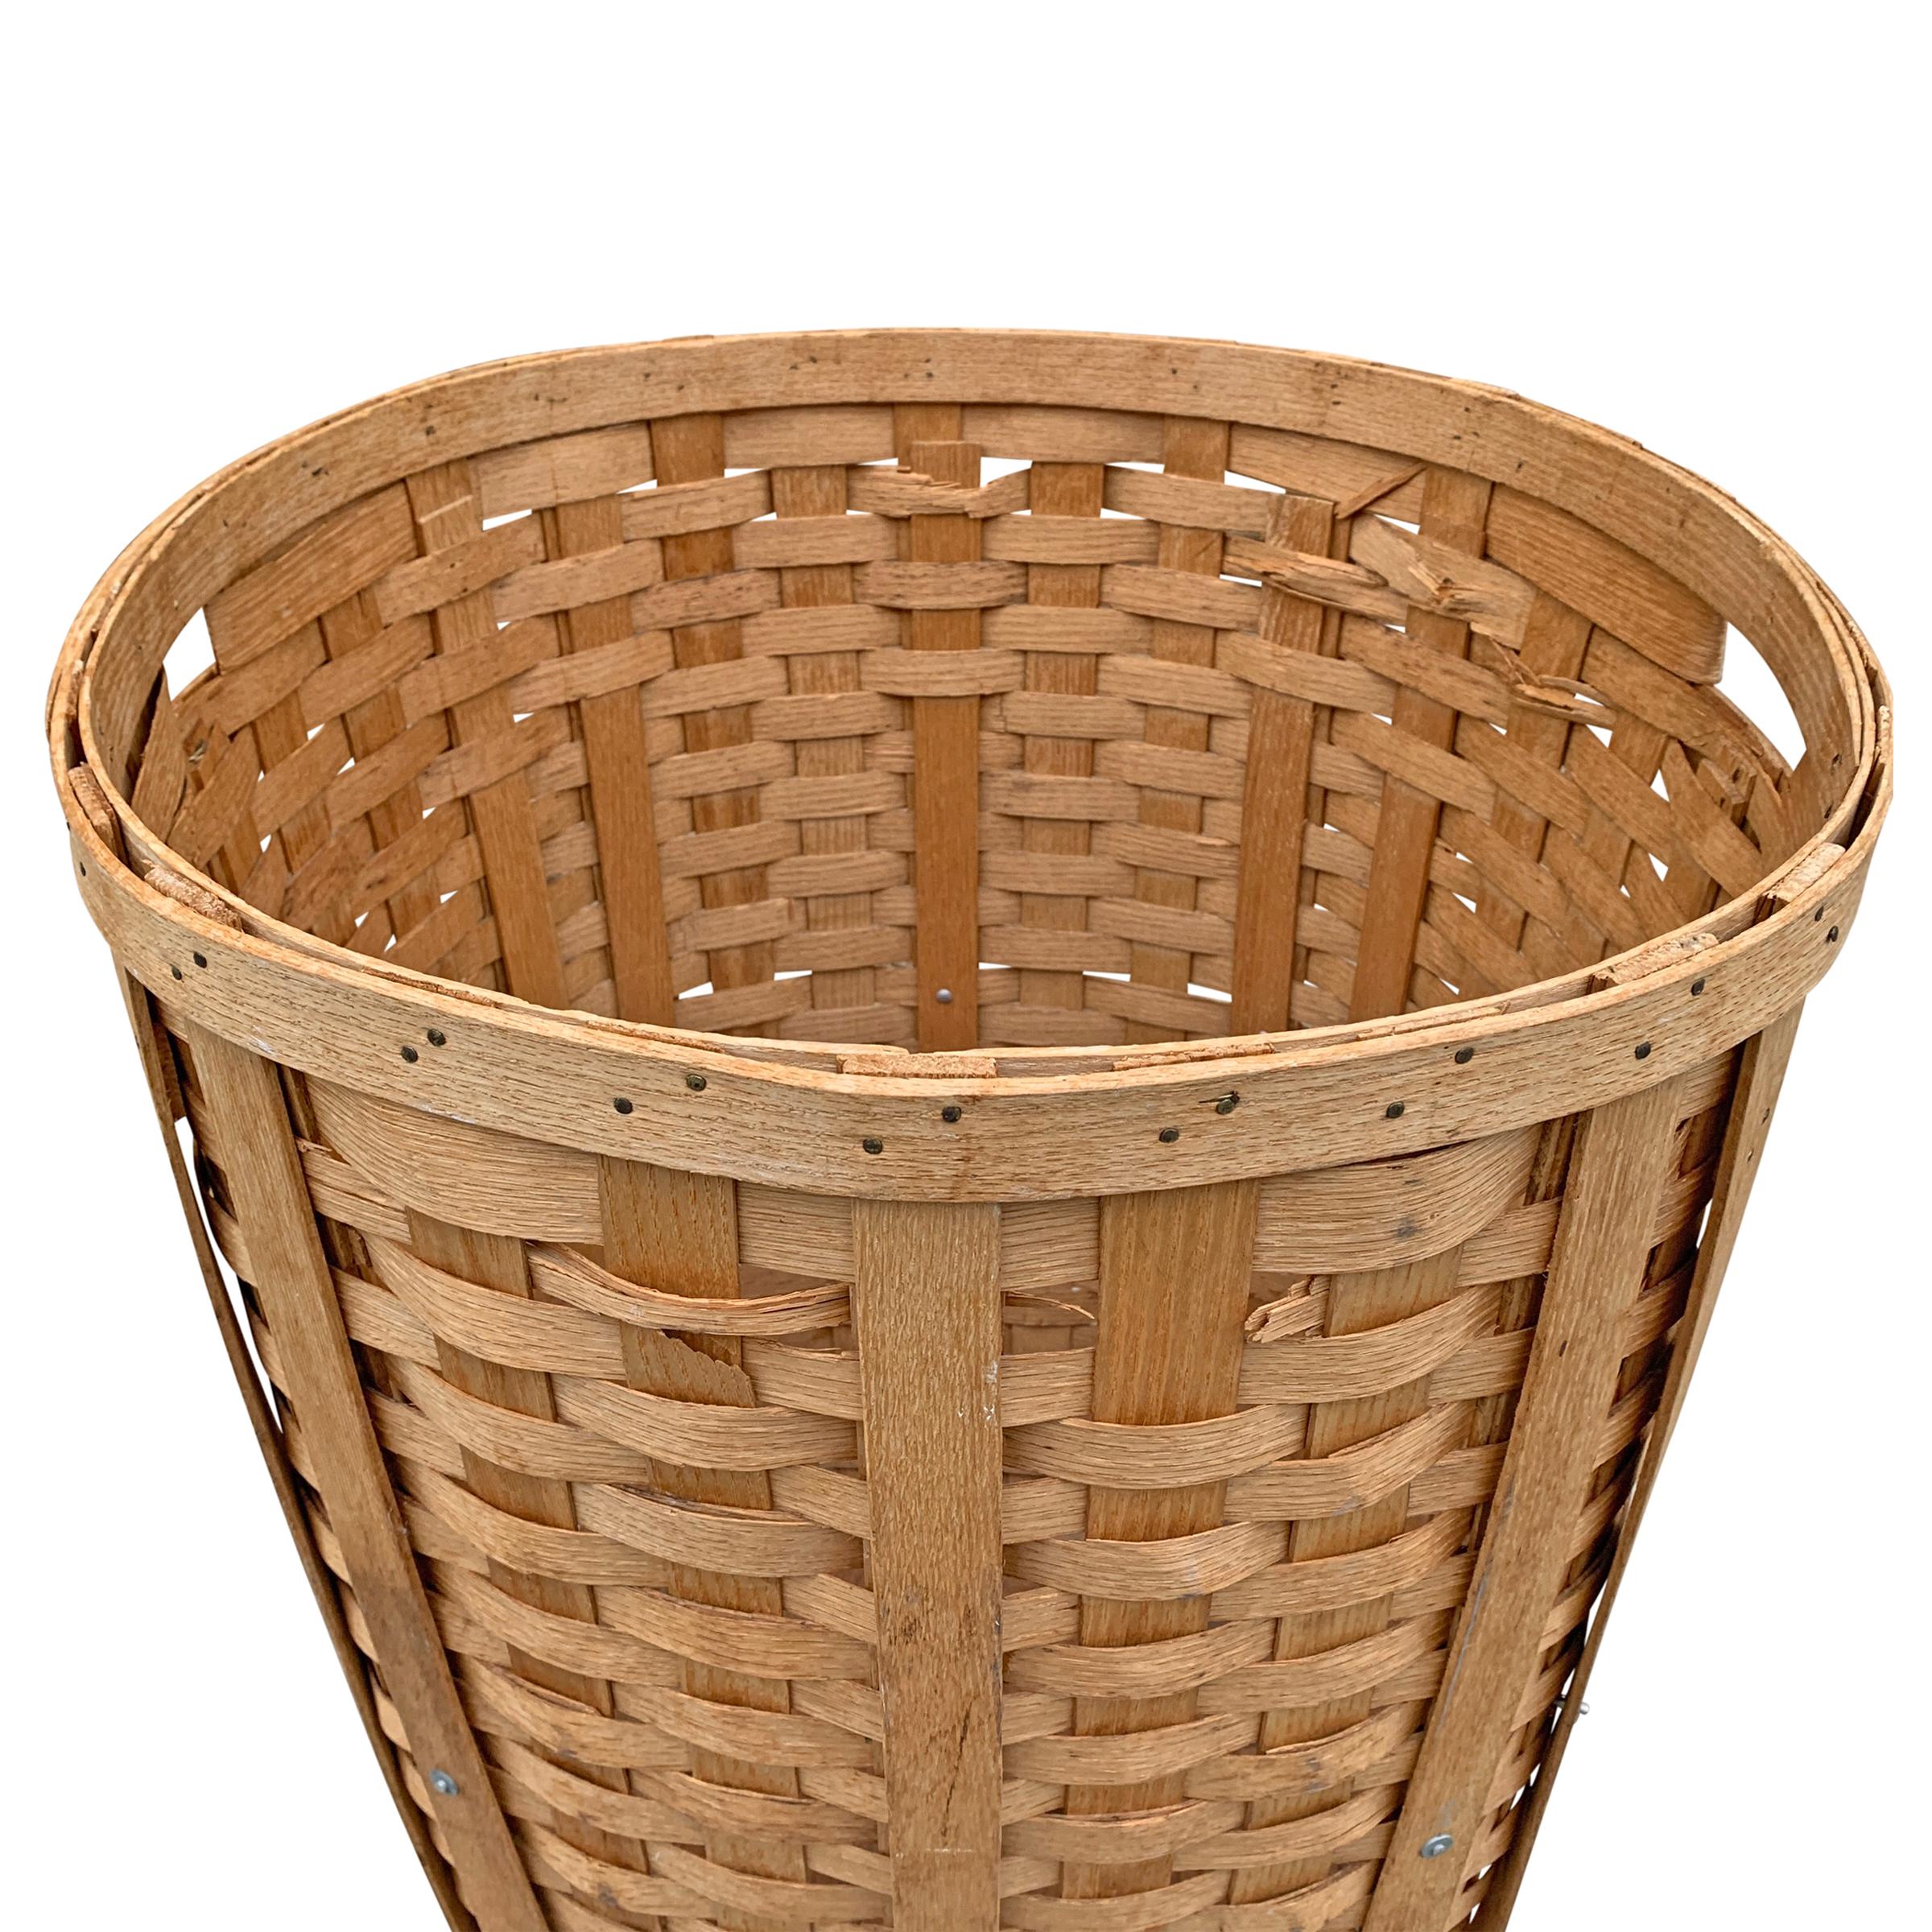 Hand-Woven Massive and Tall American Oak Splint Basket